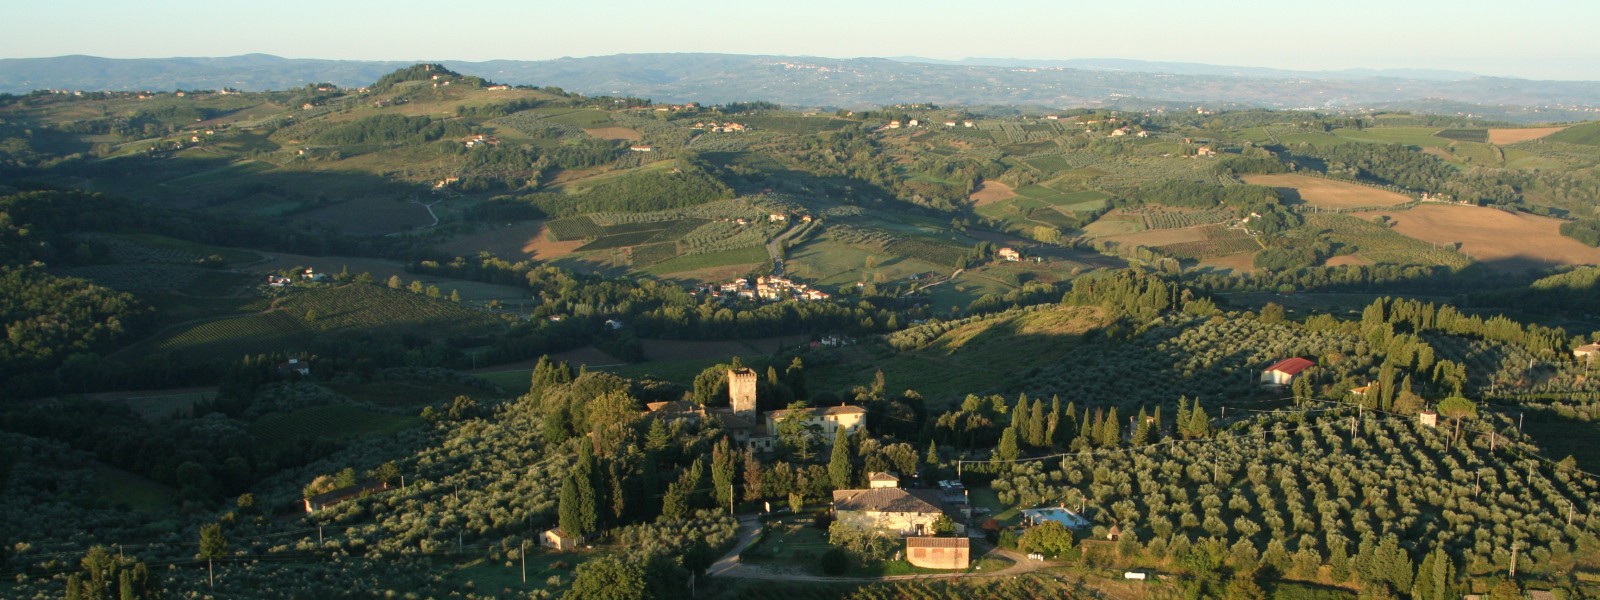 Experience hot air ballooning over Tuscany